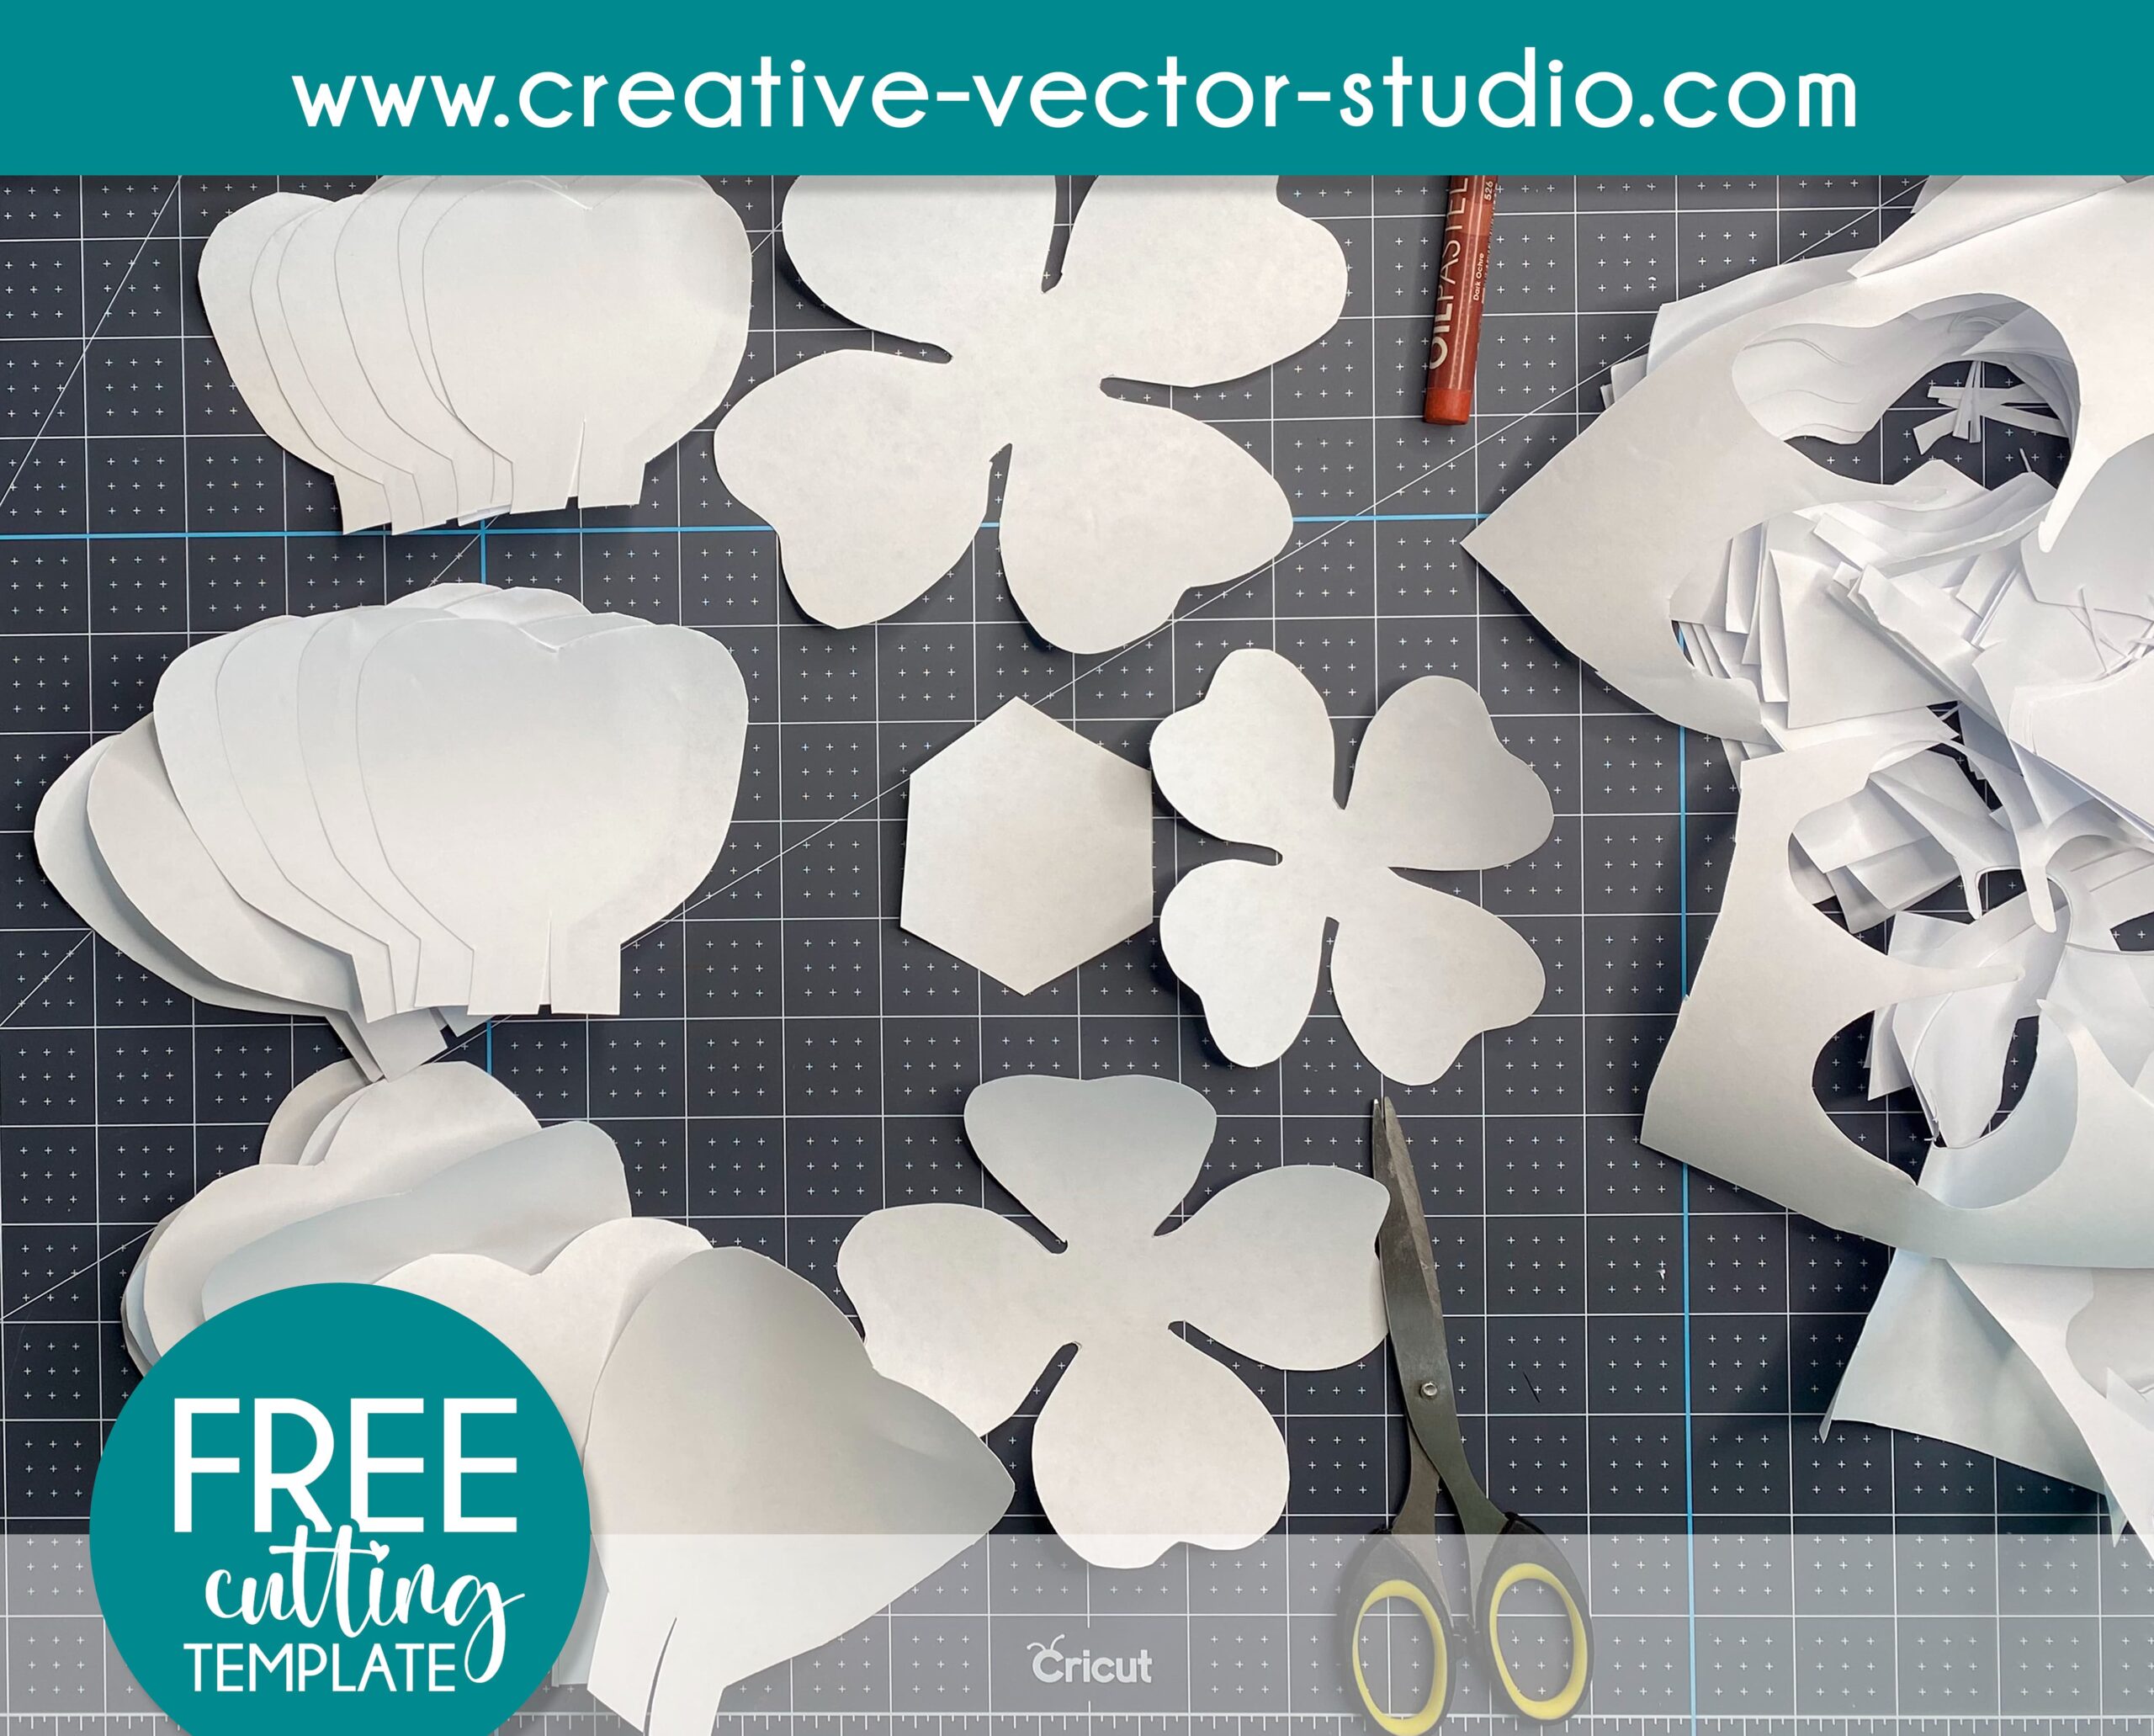 Free Giant Paper Rose Template Creative Vector Studio